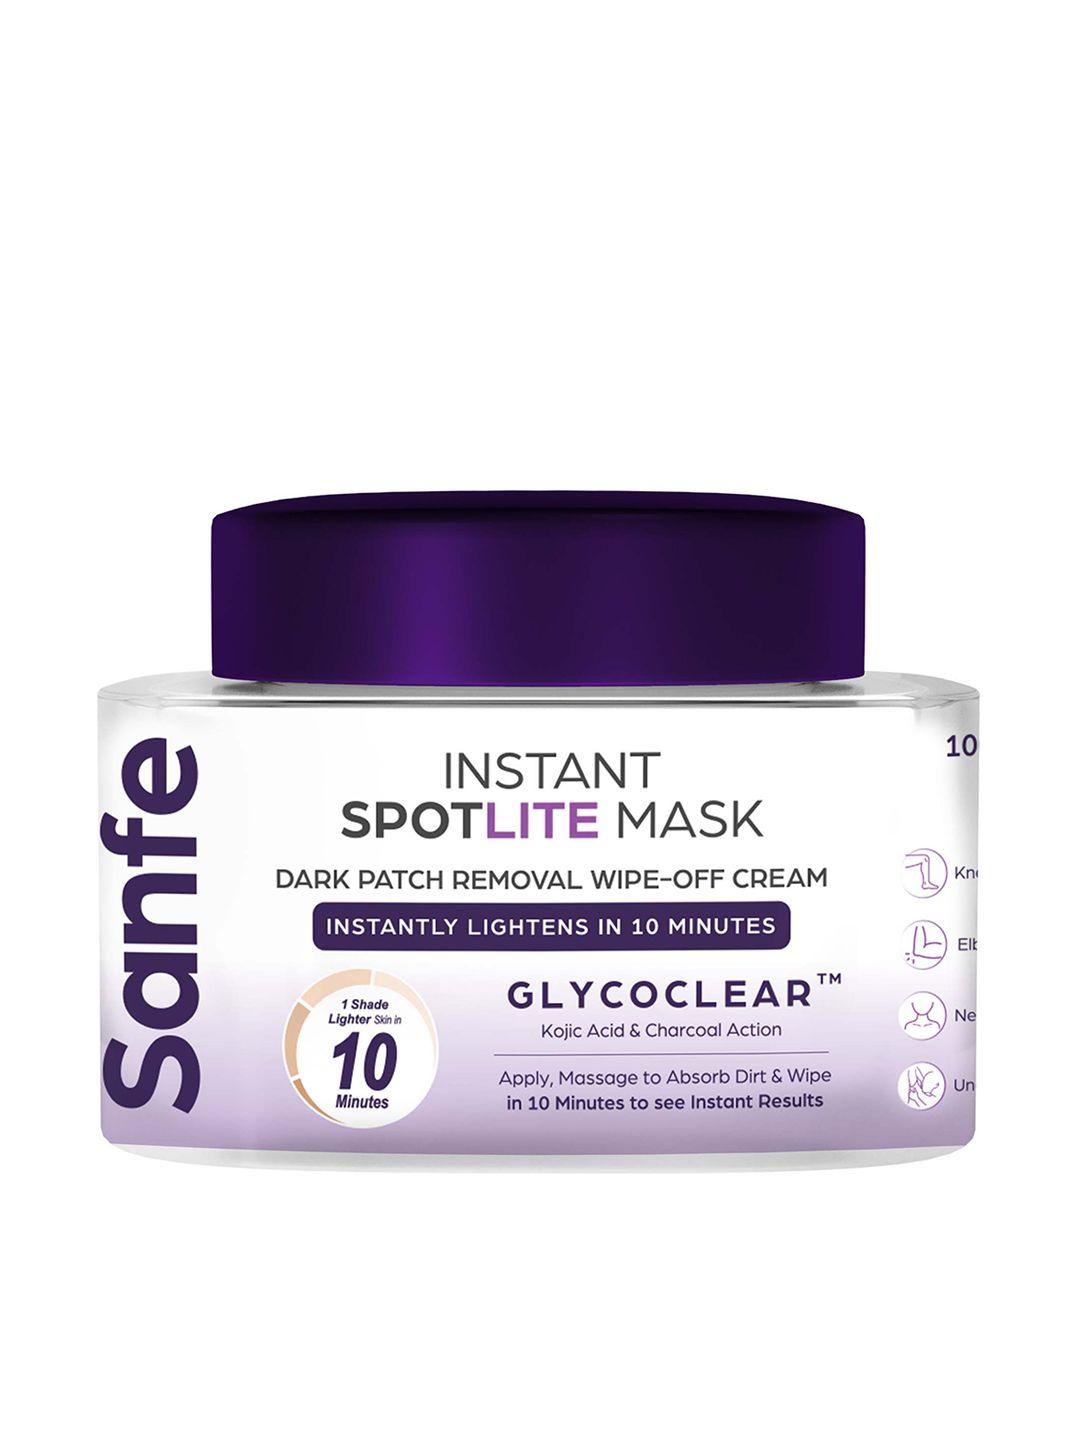 sanfe instant spotlite mask dark patch removal wipe off cream with kojic acid - 100g